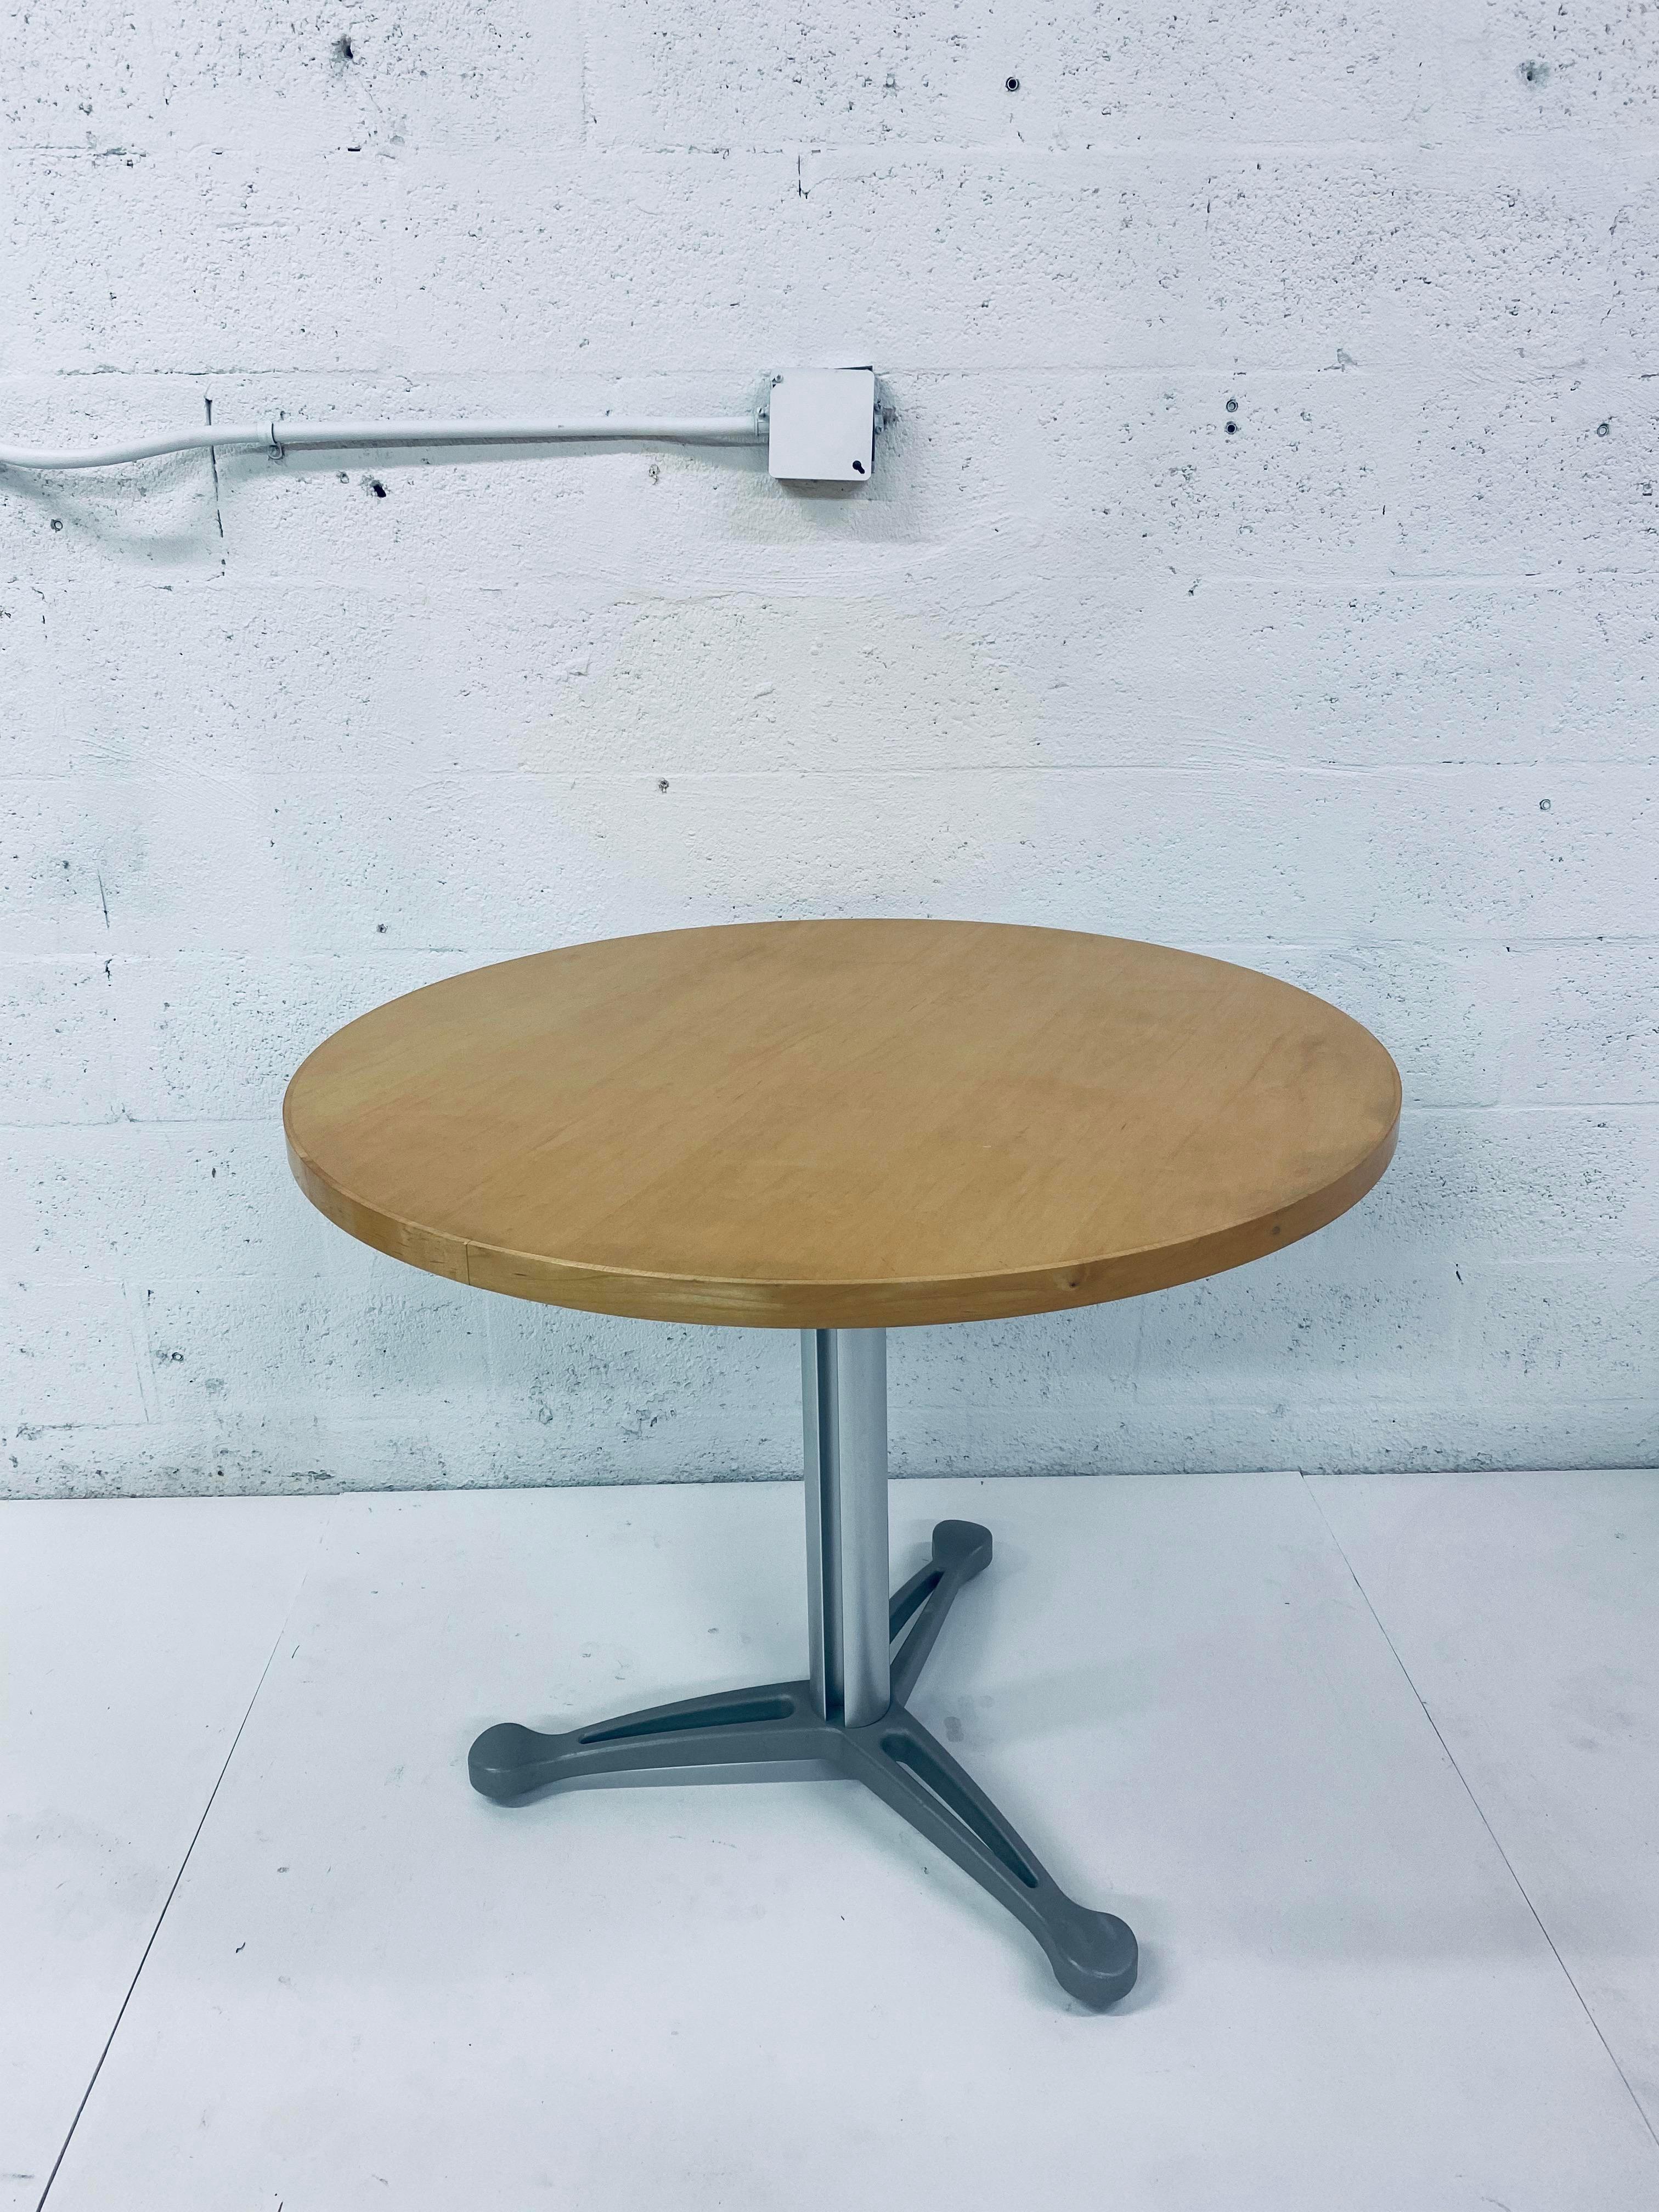 Emanuela Frattini “Propeller” Table for Knoll For Sale 1